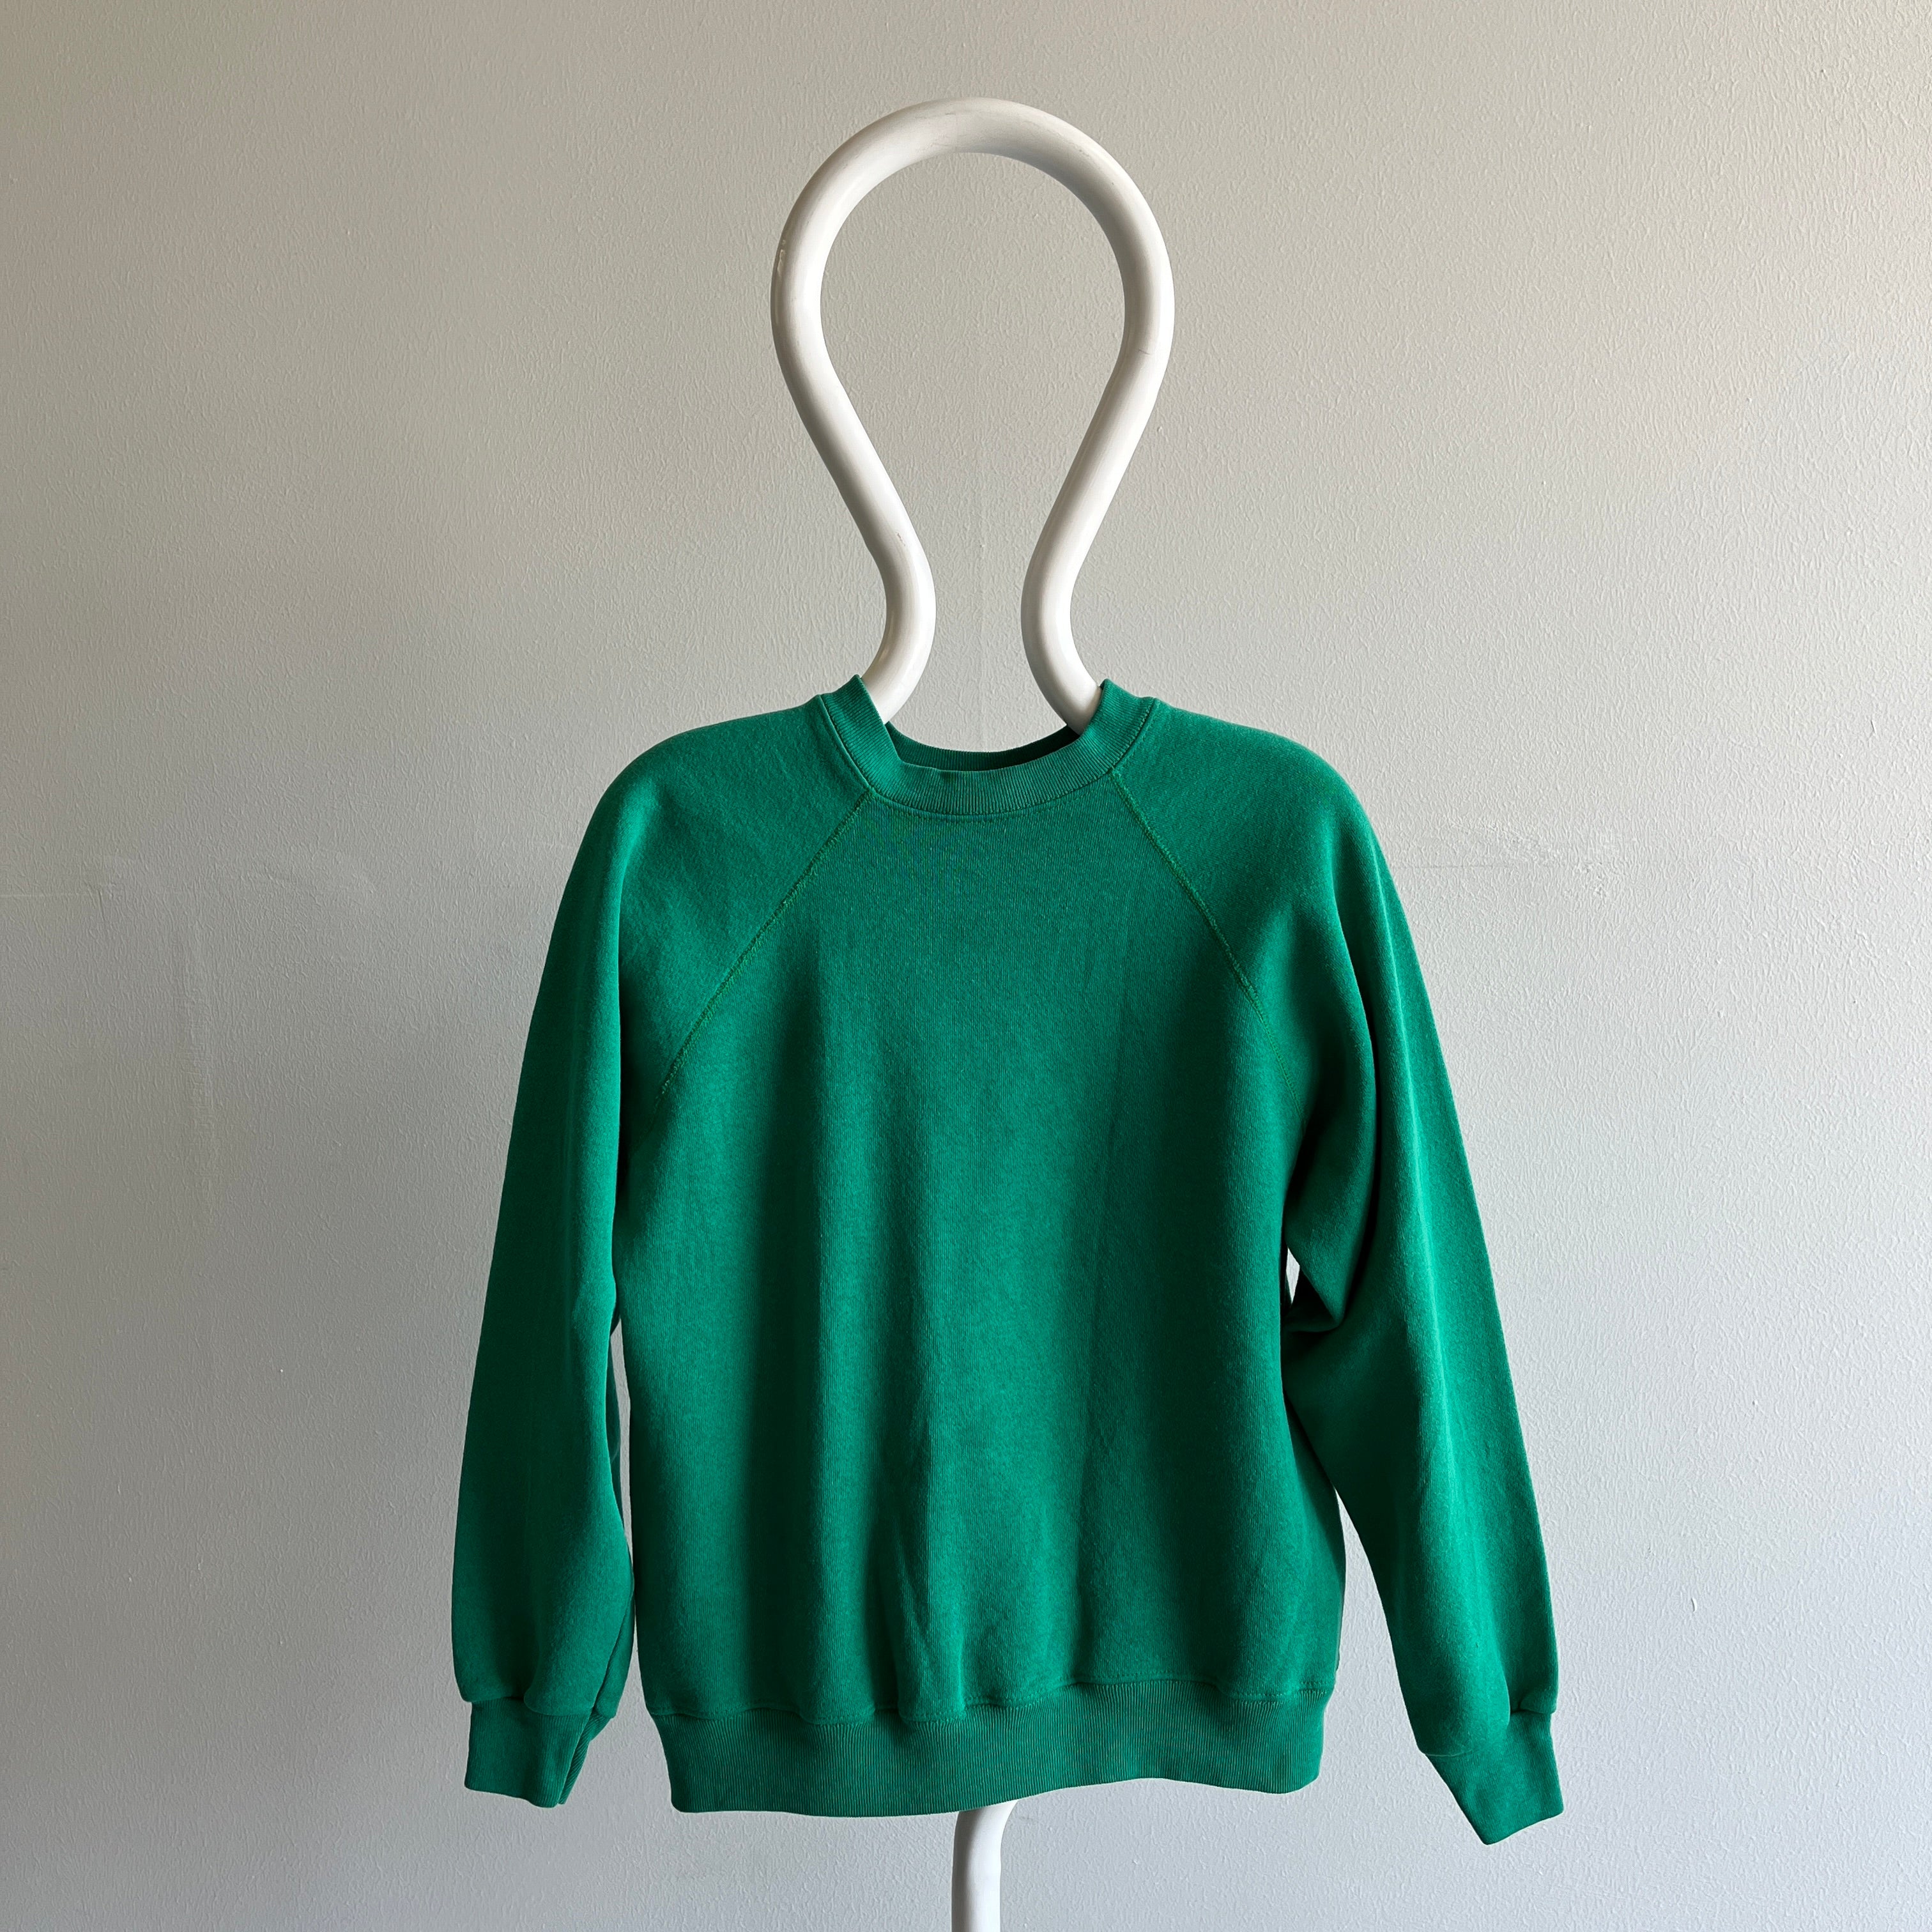 1990s Kelly Green Raglan Sweatshirt by Tultex